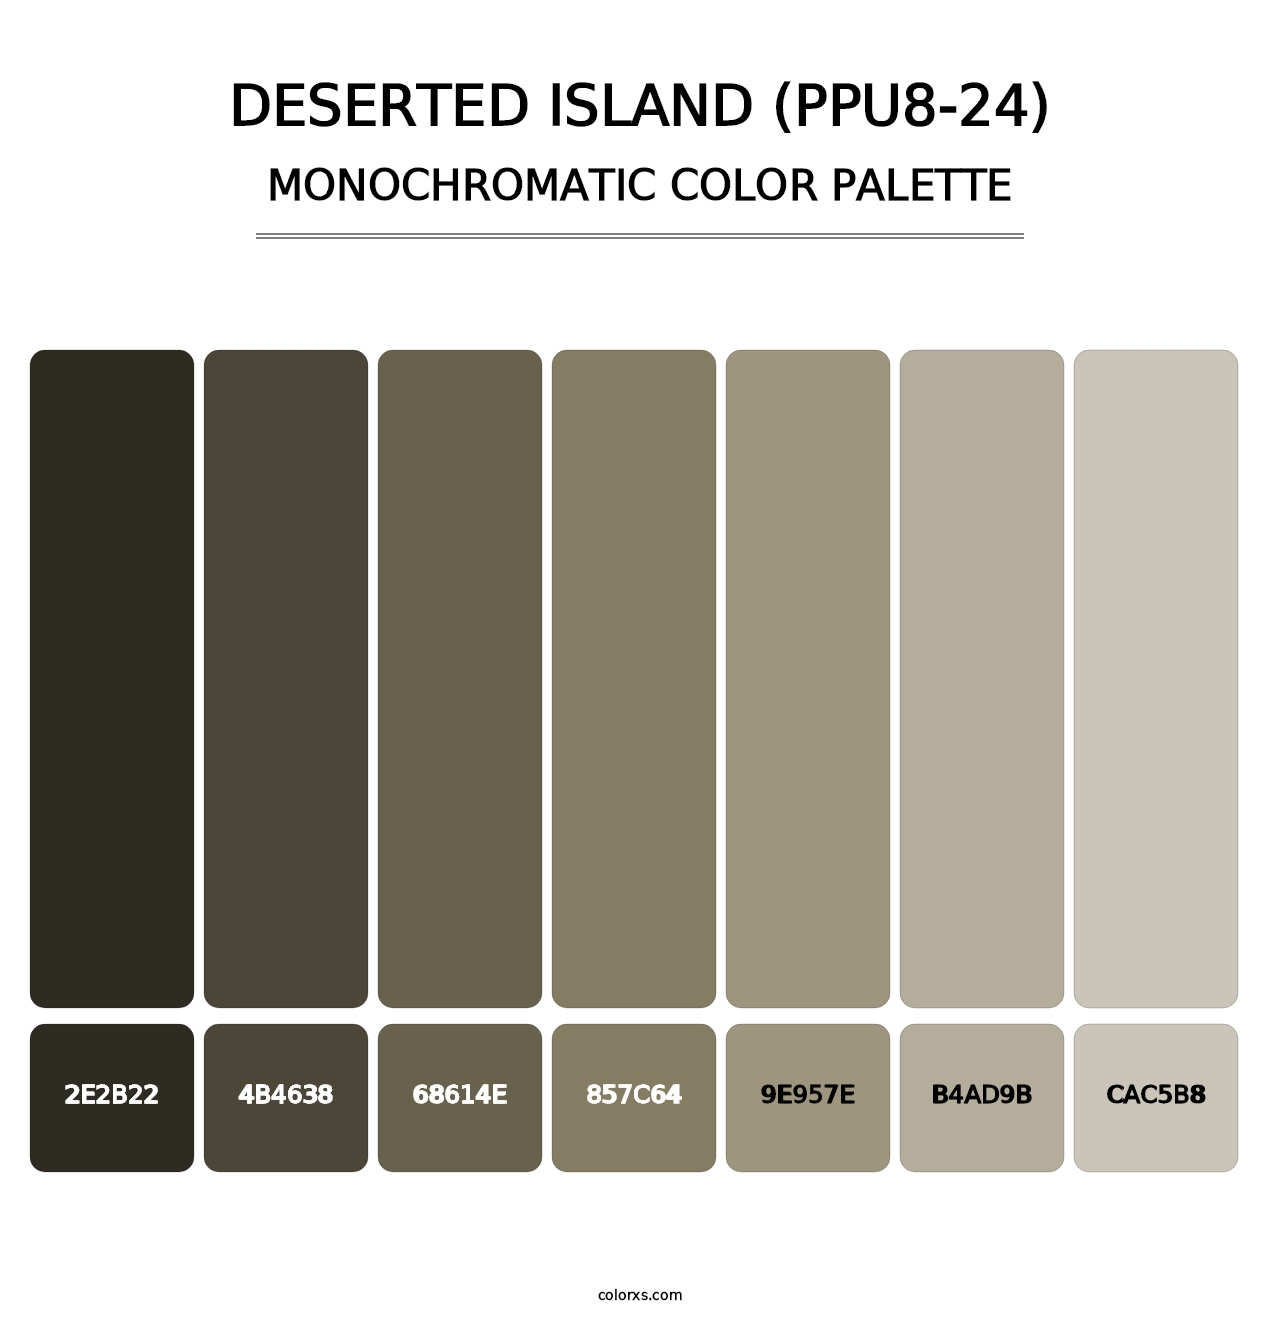 Deserted Island (PPU8-24) - Monochromatic Color Palette